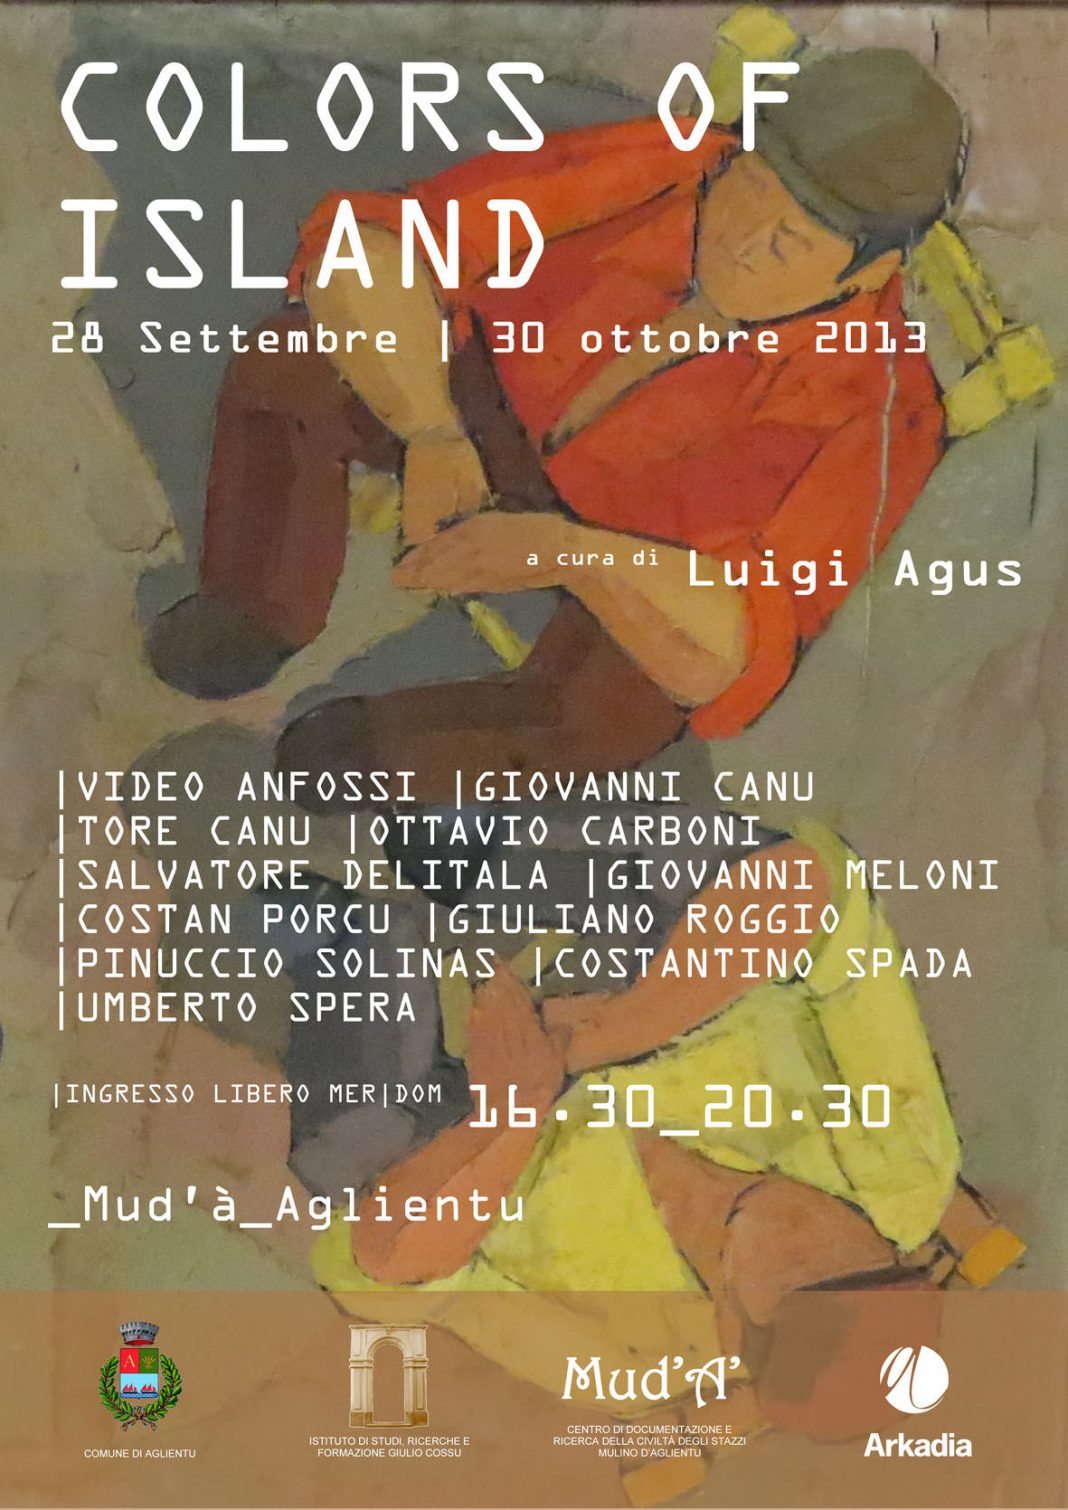 Colors of Island. Pittura del nord Sardegna 
del secondo ‘900https://www.exibart.com/repository/media/eventi/2013/10/colors-of-island.-pittura-del-nord-sardegna-del-secondo-‘900-1068x1510.jpg